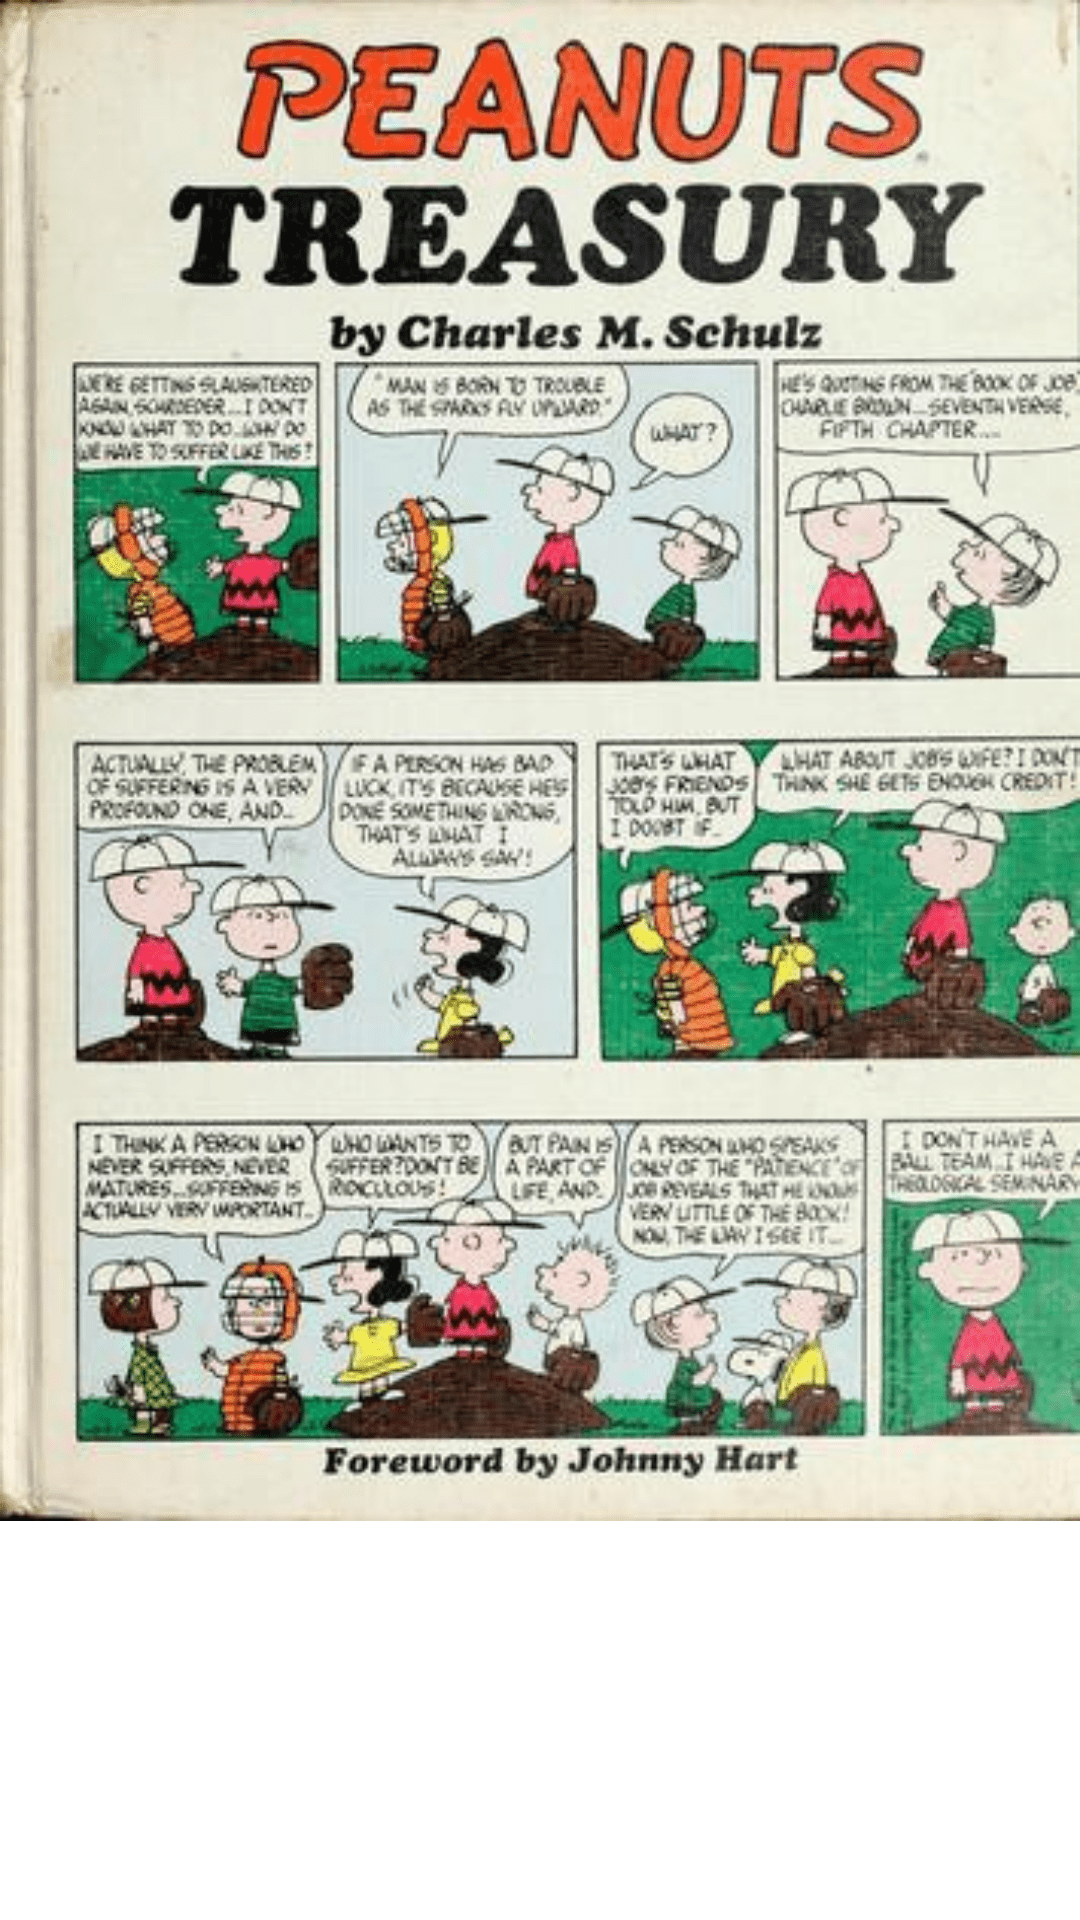 Peanuts Treasury by Charles M. Schulz